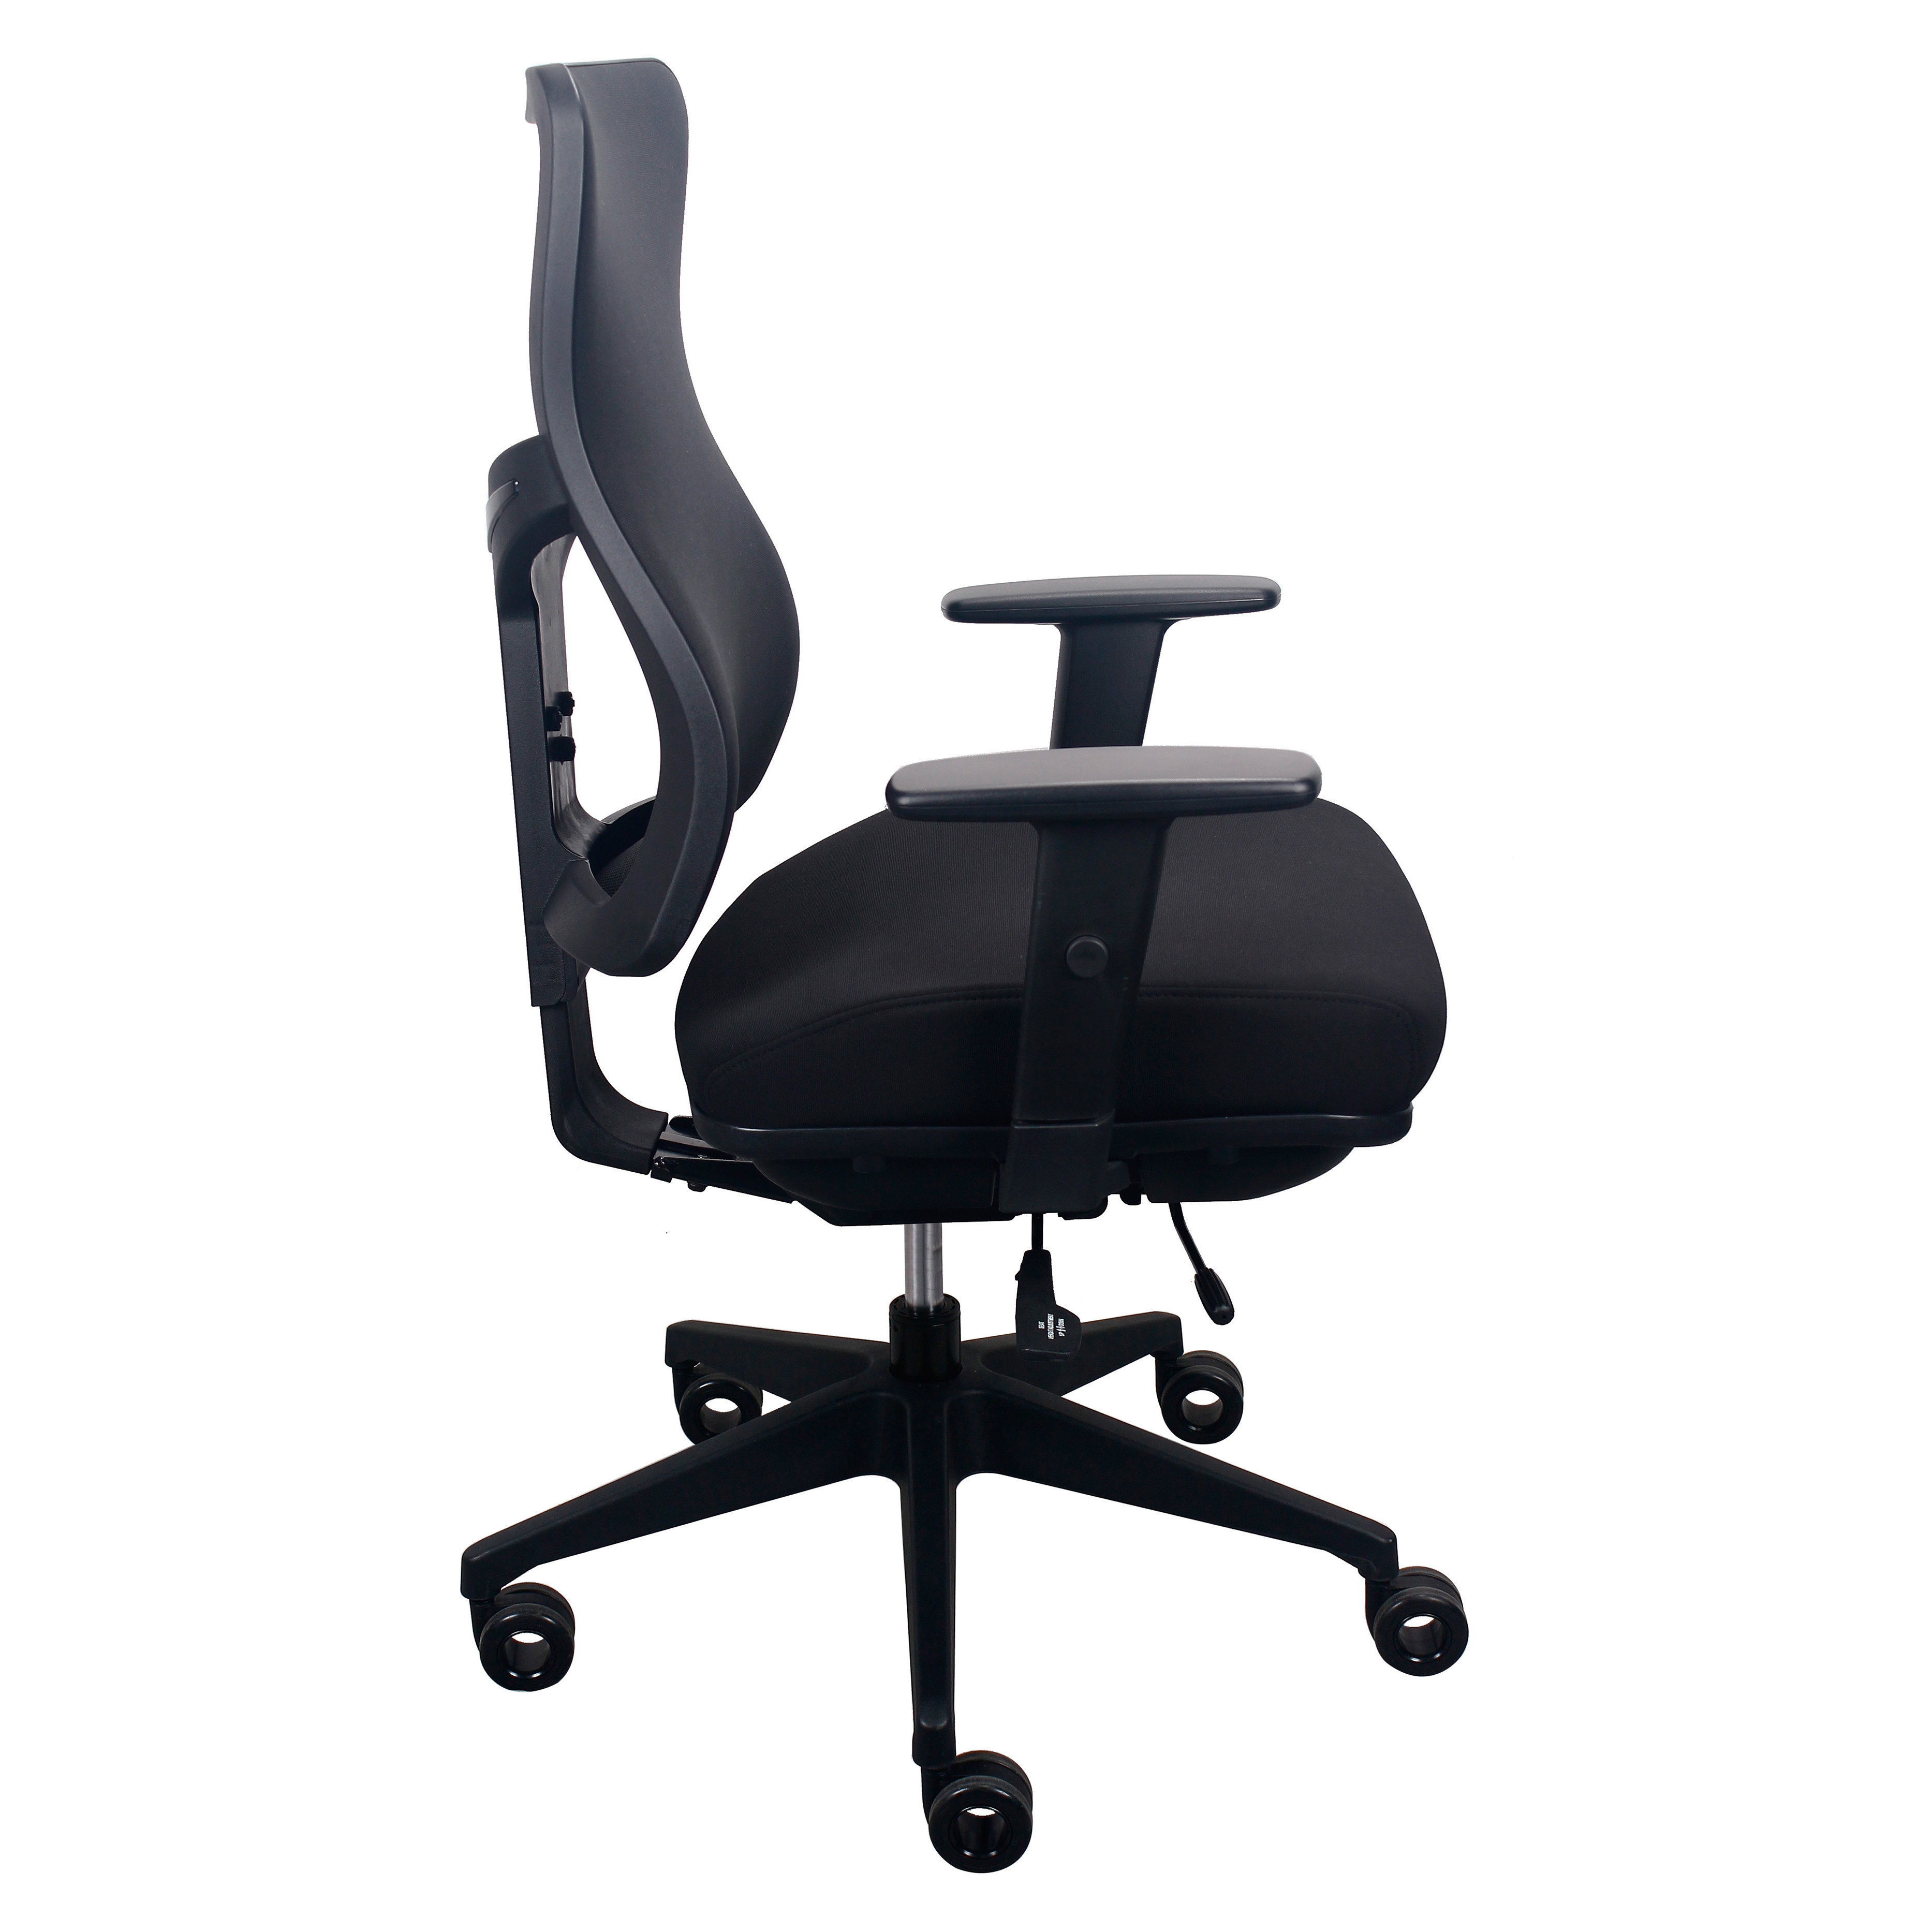 Tempurpedic Office Chair | The Best Chair Review Blog